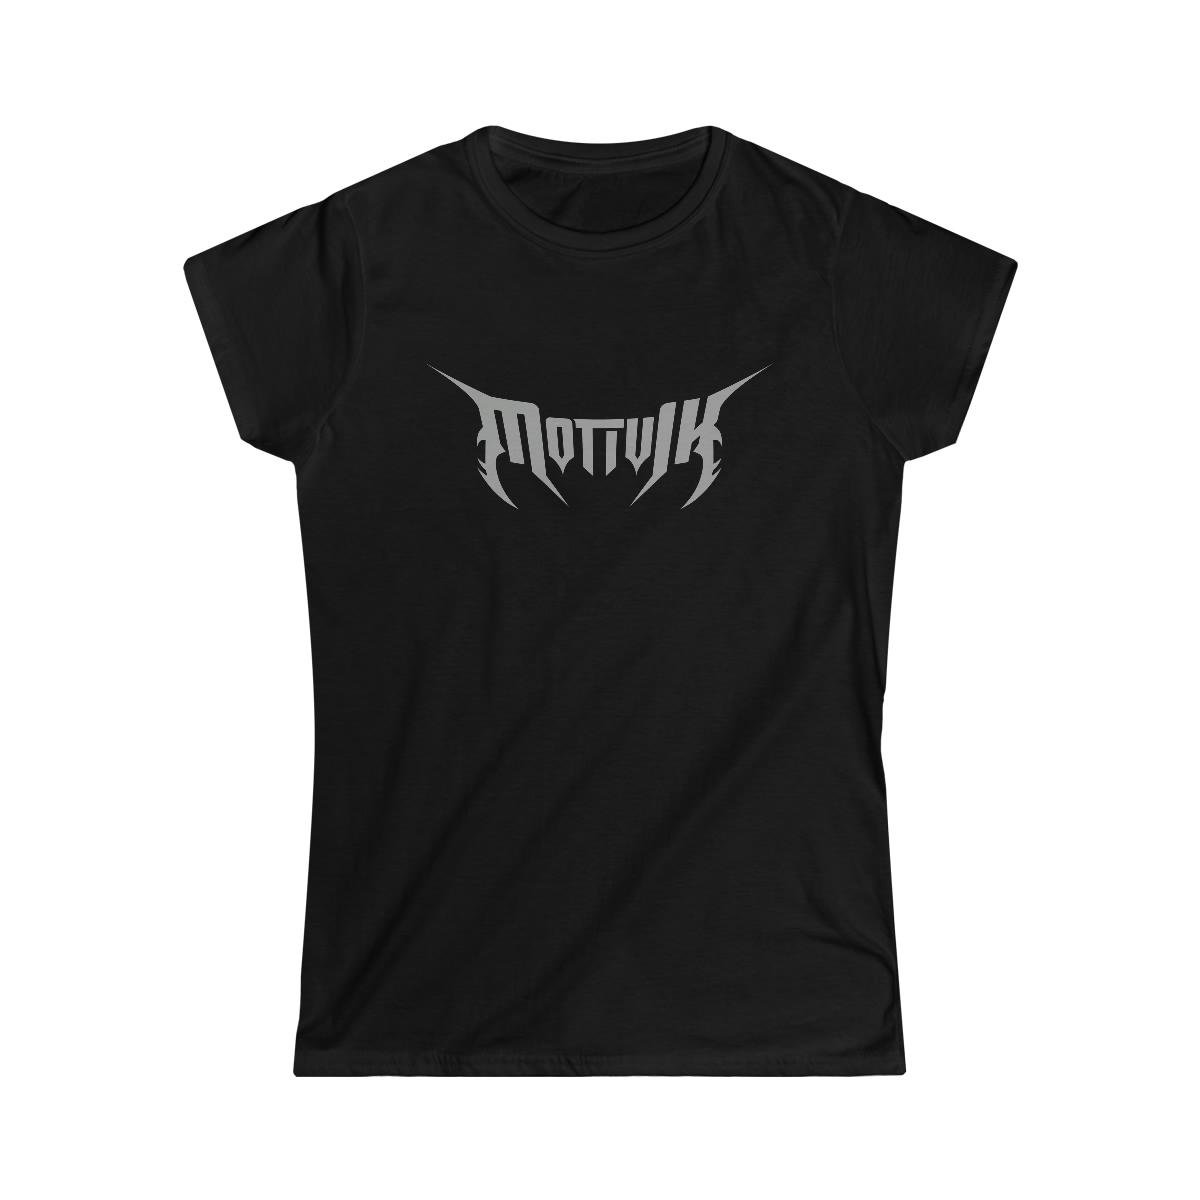 Motivik Grey Logo Women’s Short Sleeve Tshirt